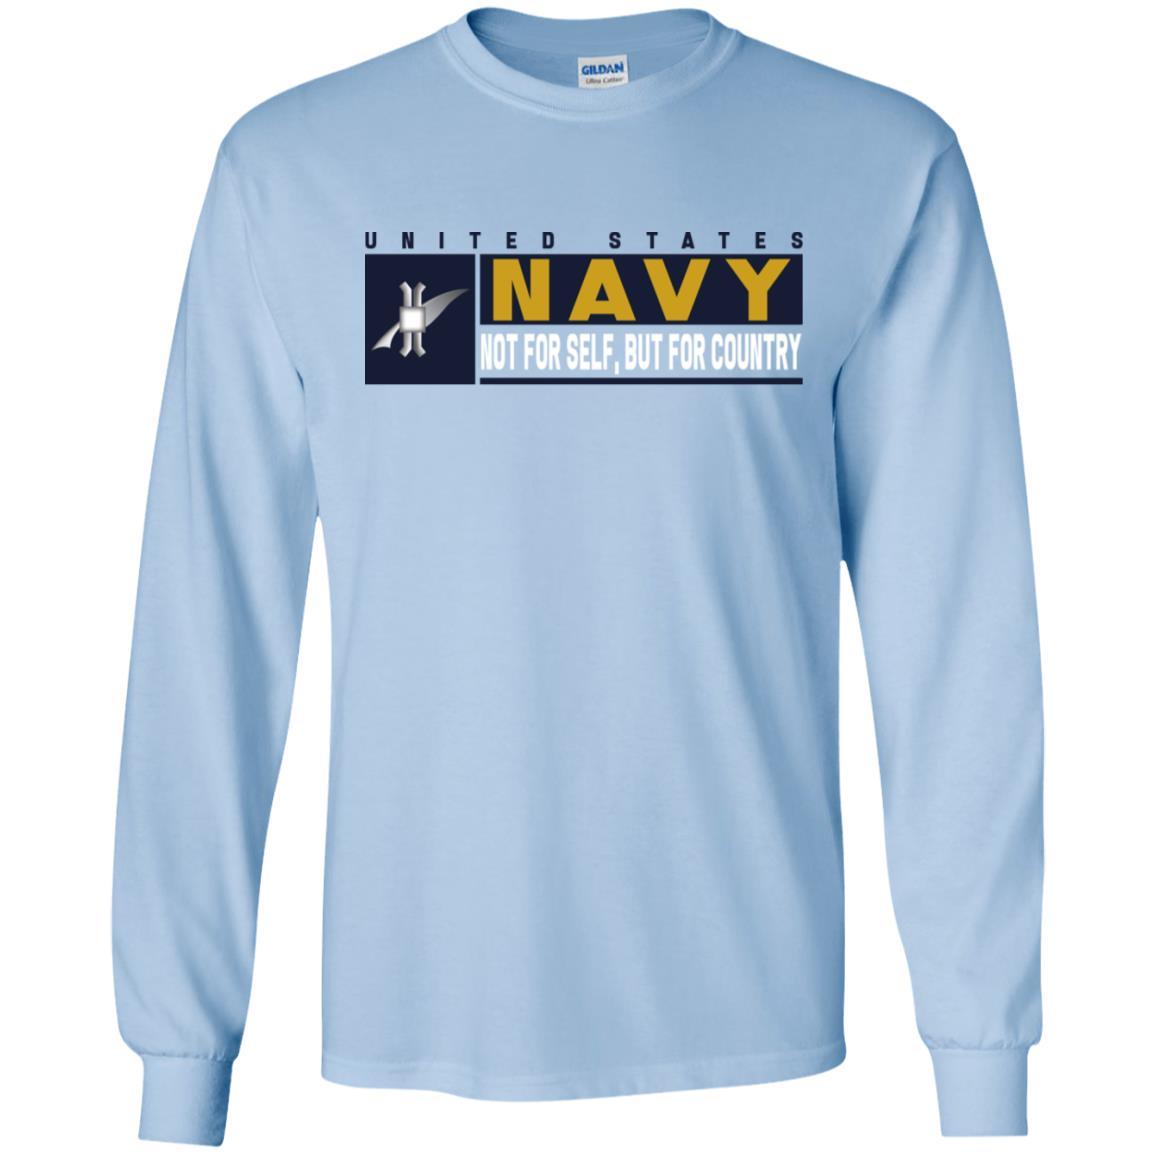 Navy Legalman Navy LN- Not for self Long Sleeve - Pullover Hoodie-TShirt-Navy-Veterans Nation